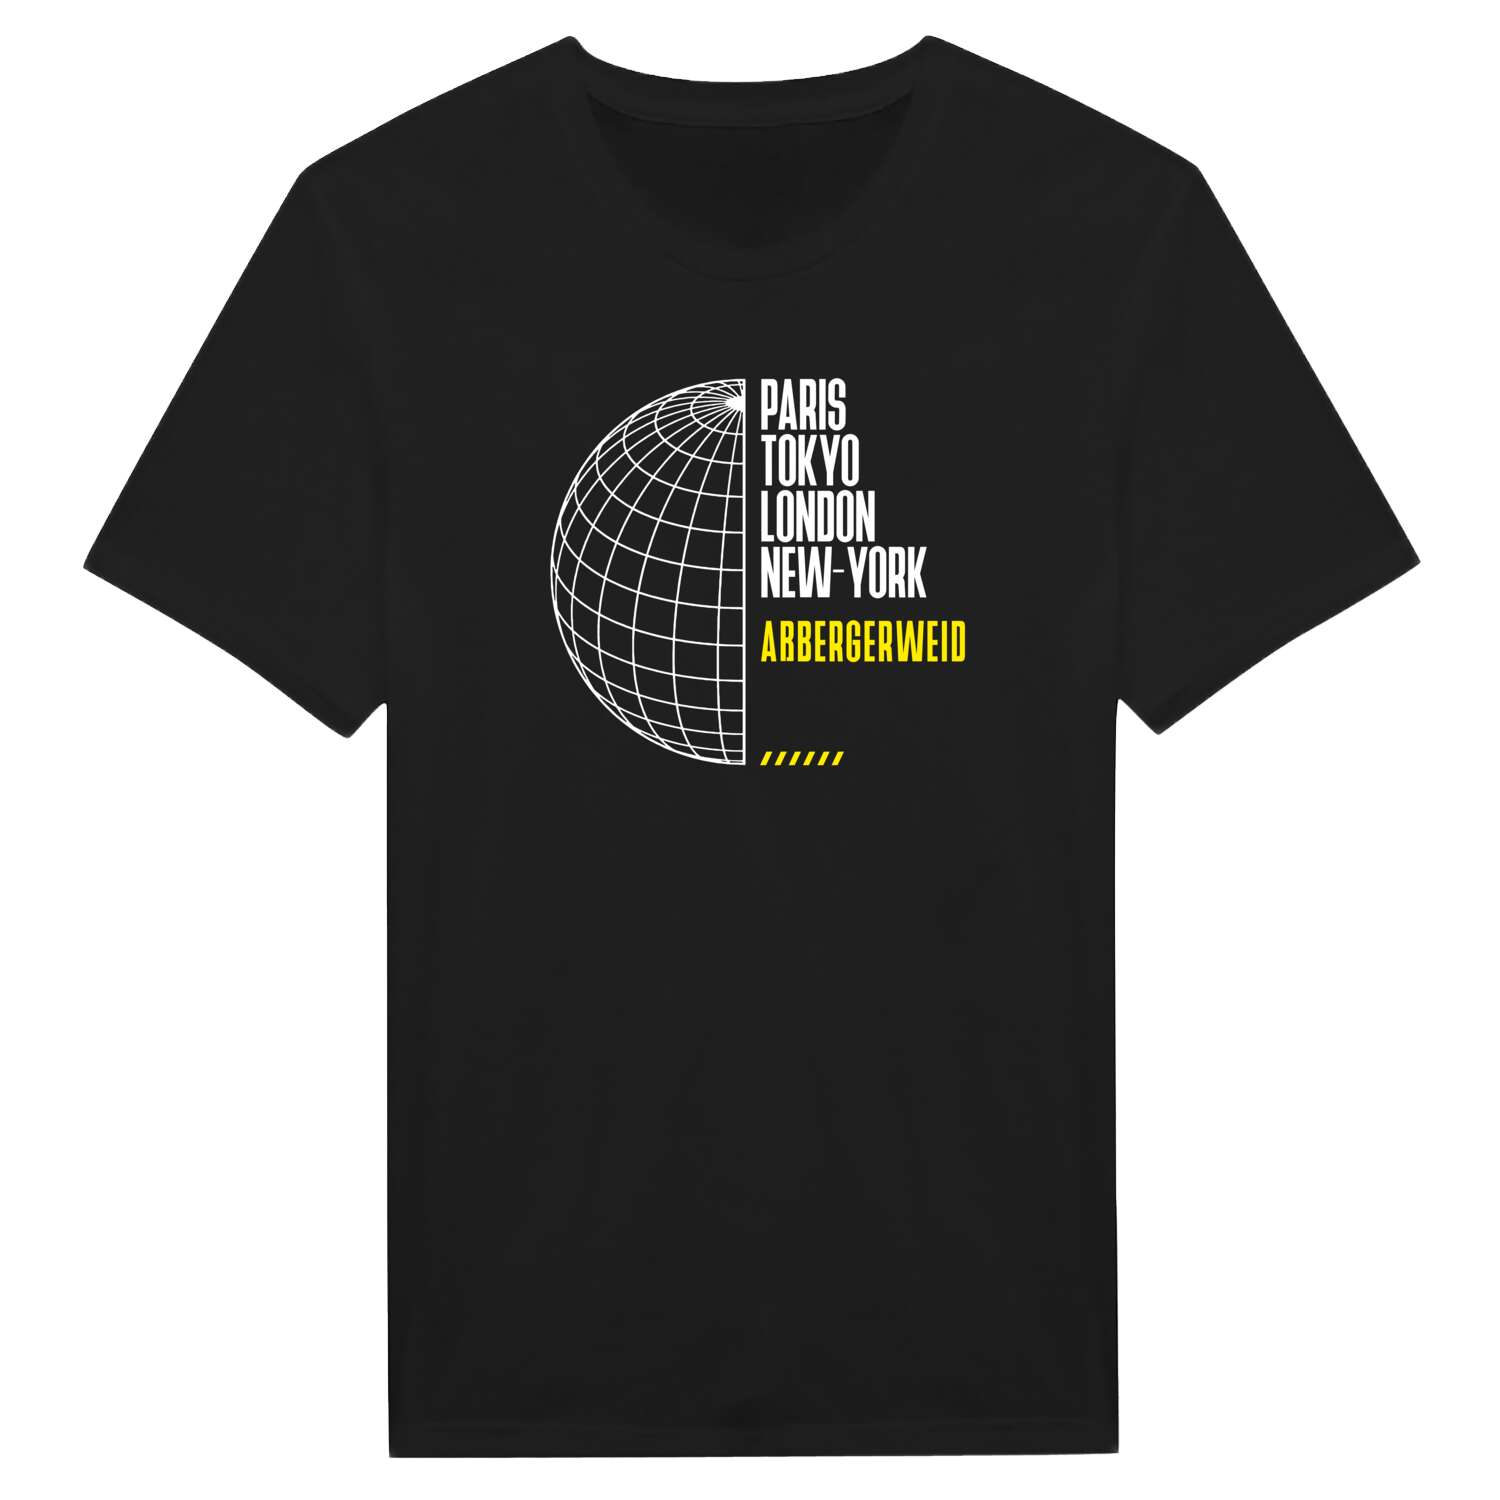 Aßbergerweid T-Shirt »Paris Tokyo London«